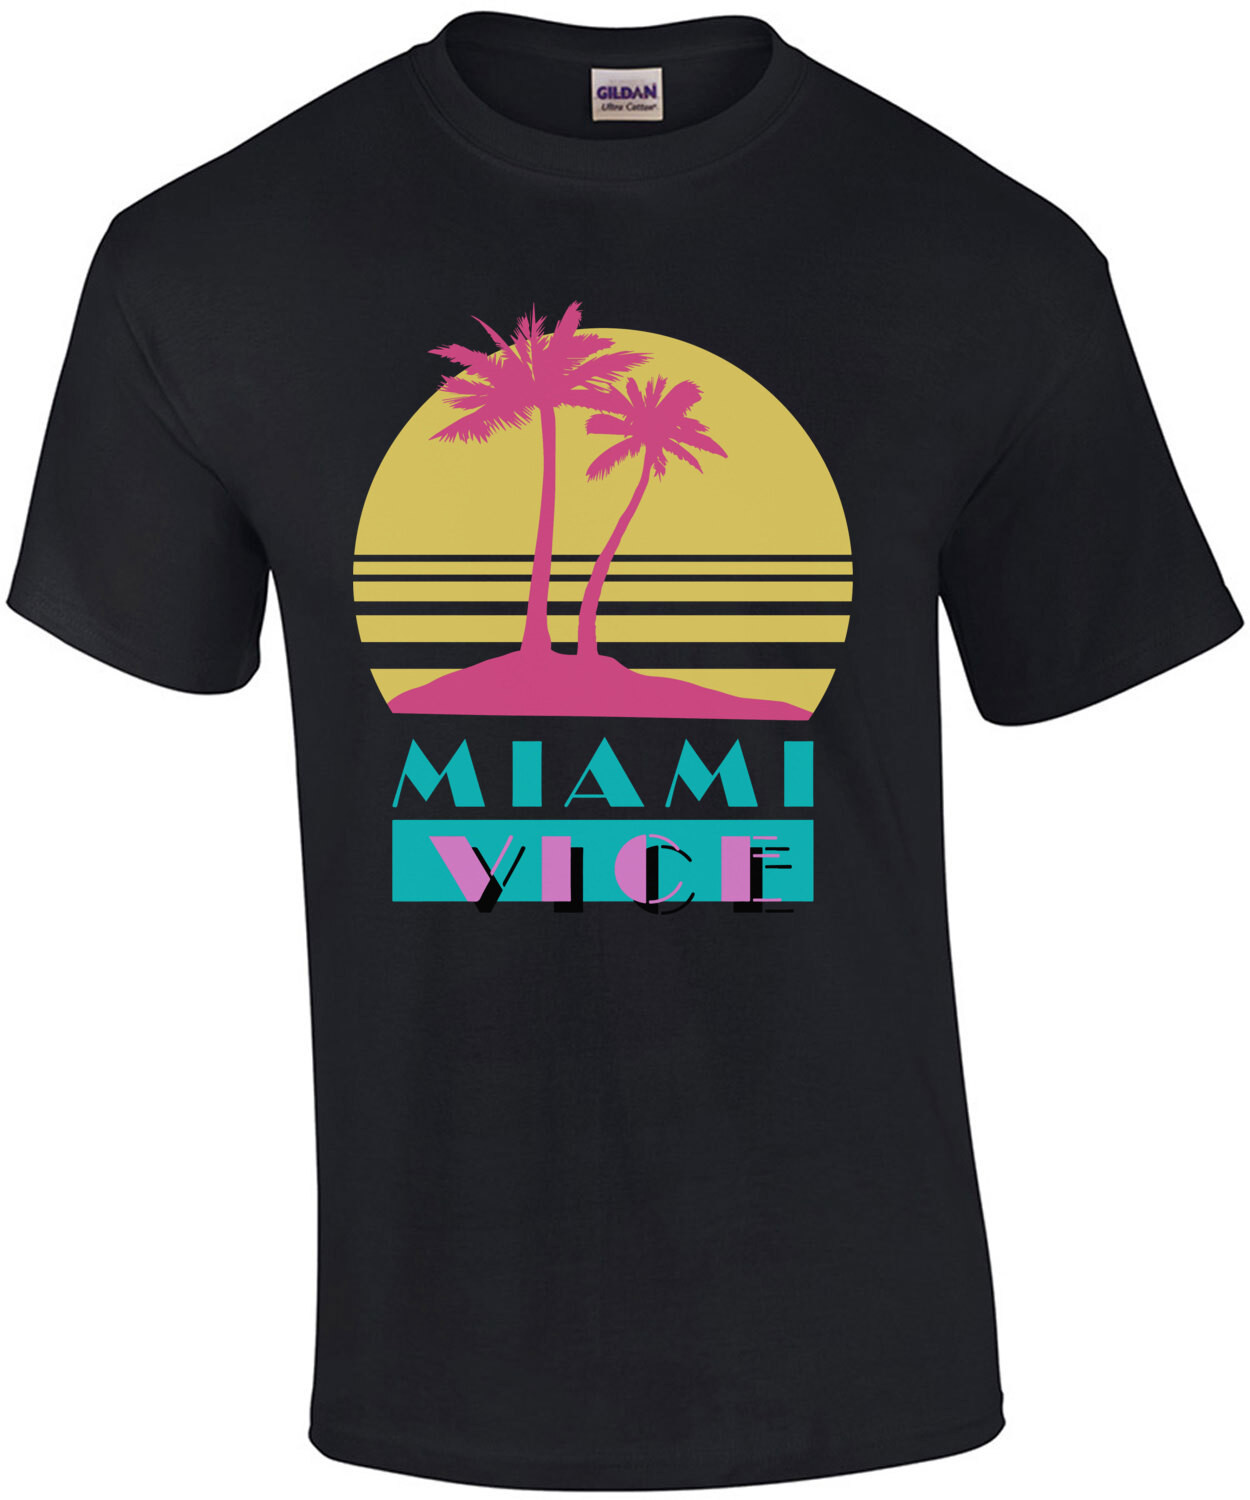 Miami Vice - 80's T-Shirt